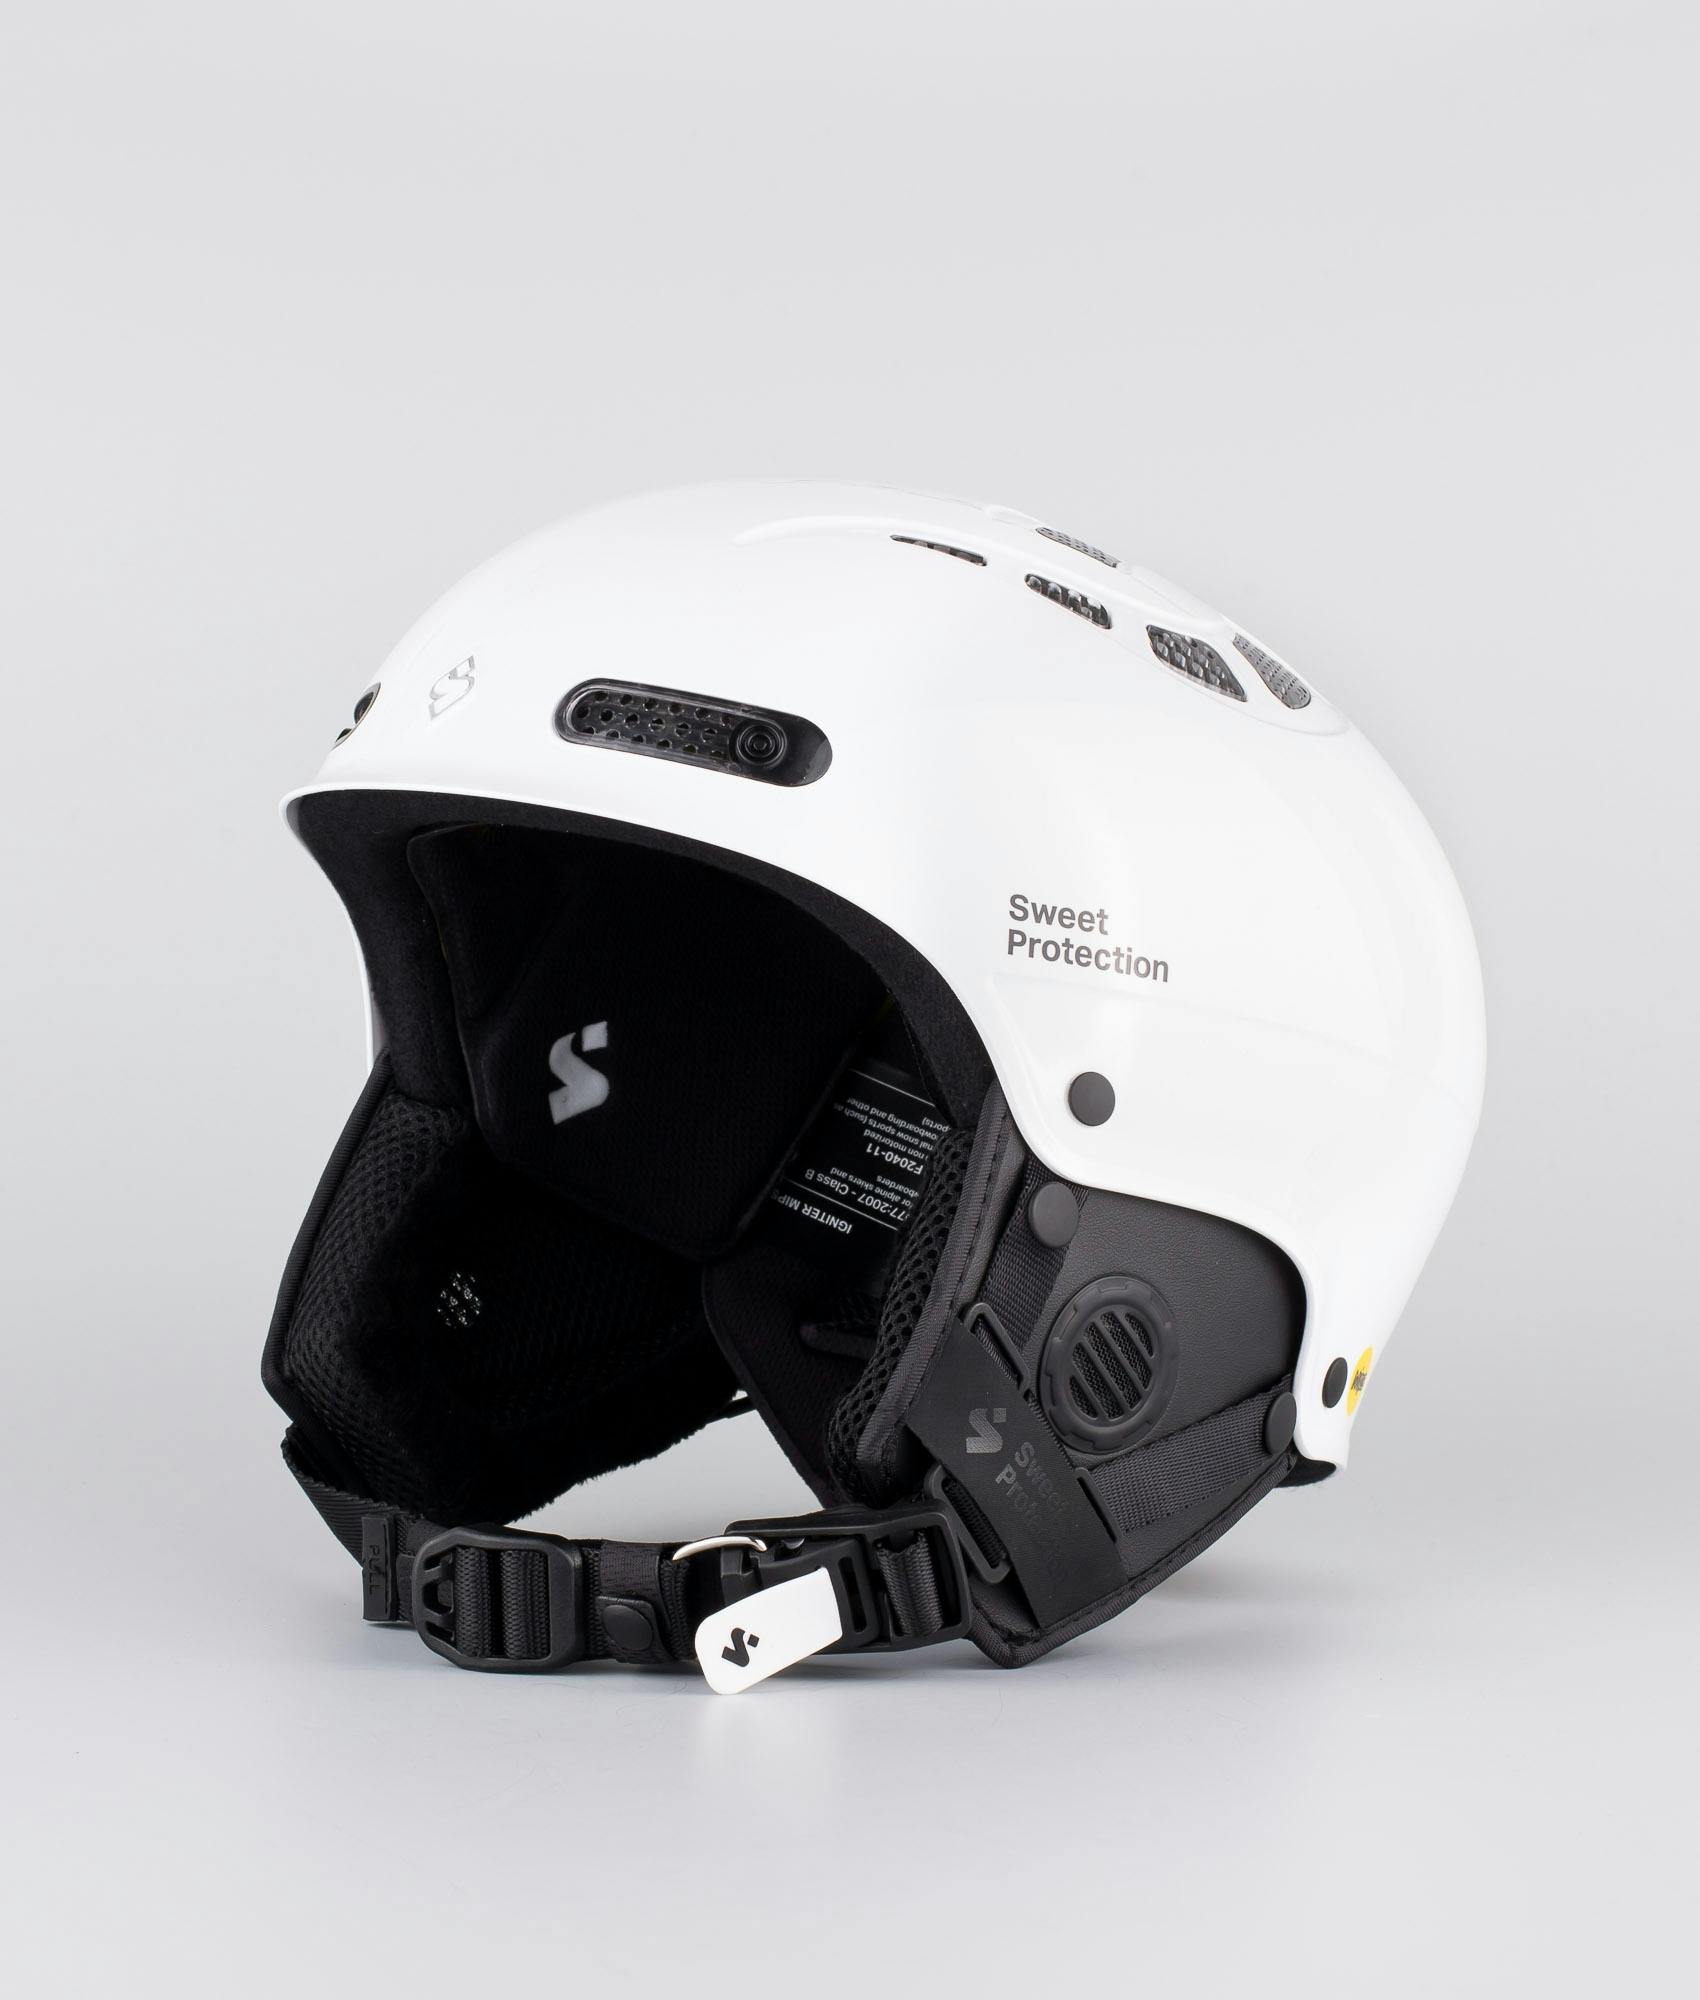 Sweet protection ski helmet